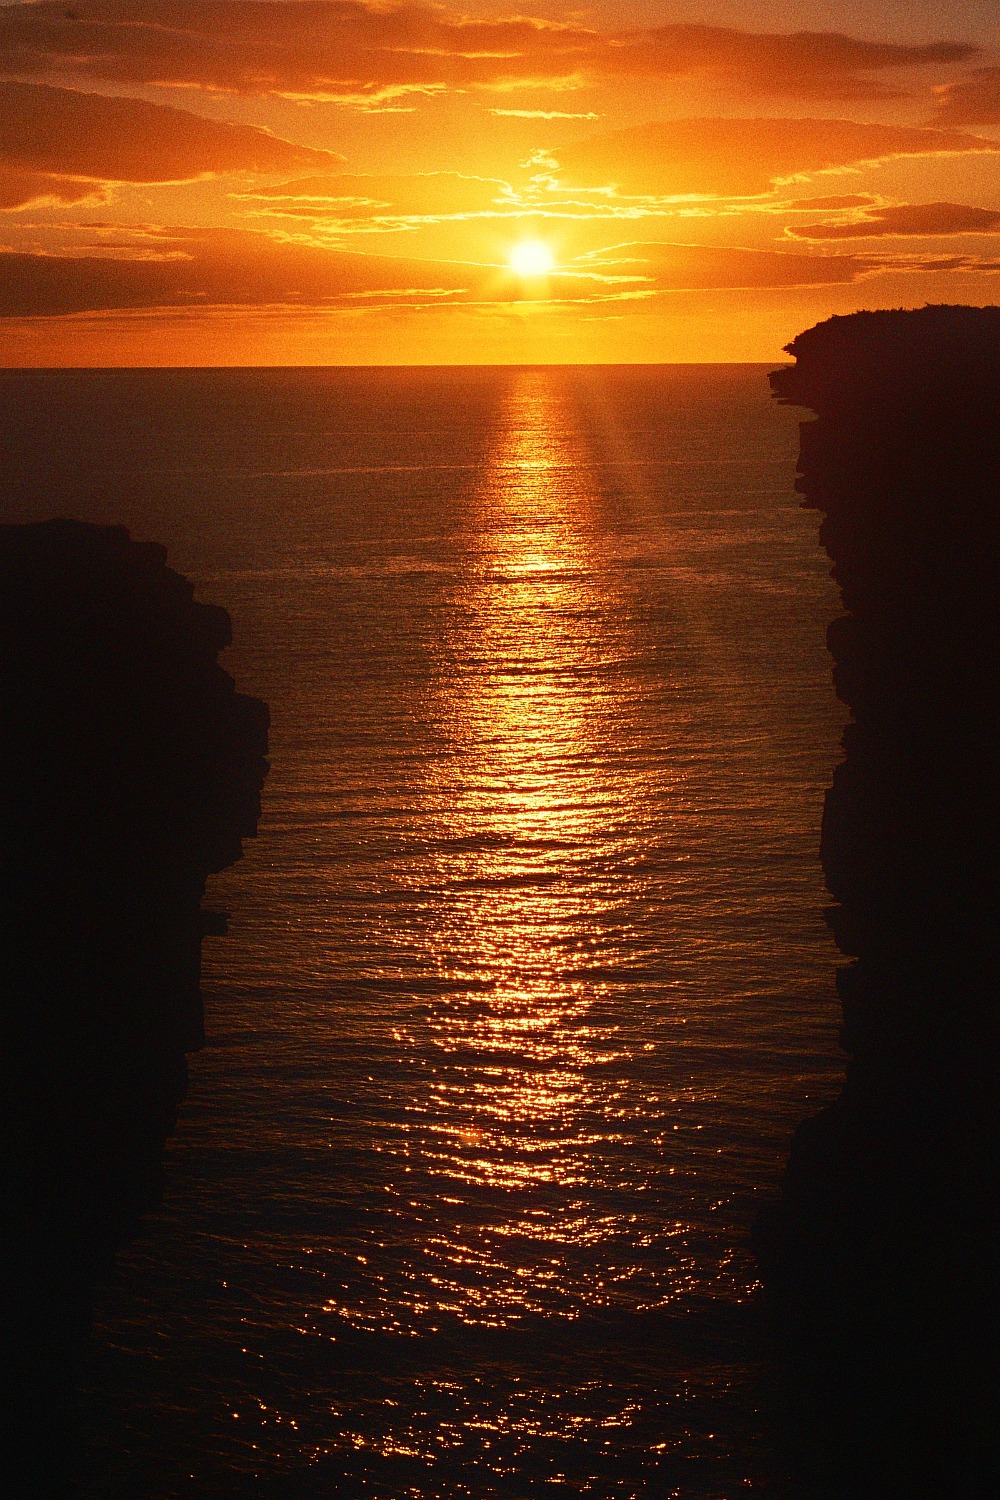 Photo Essay: Ireland Coast at Sunset » Rambling Tart